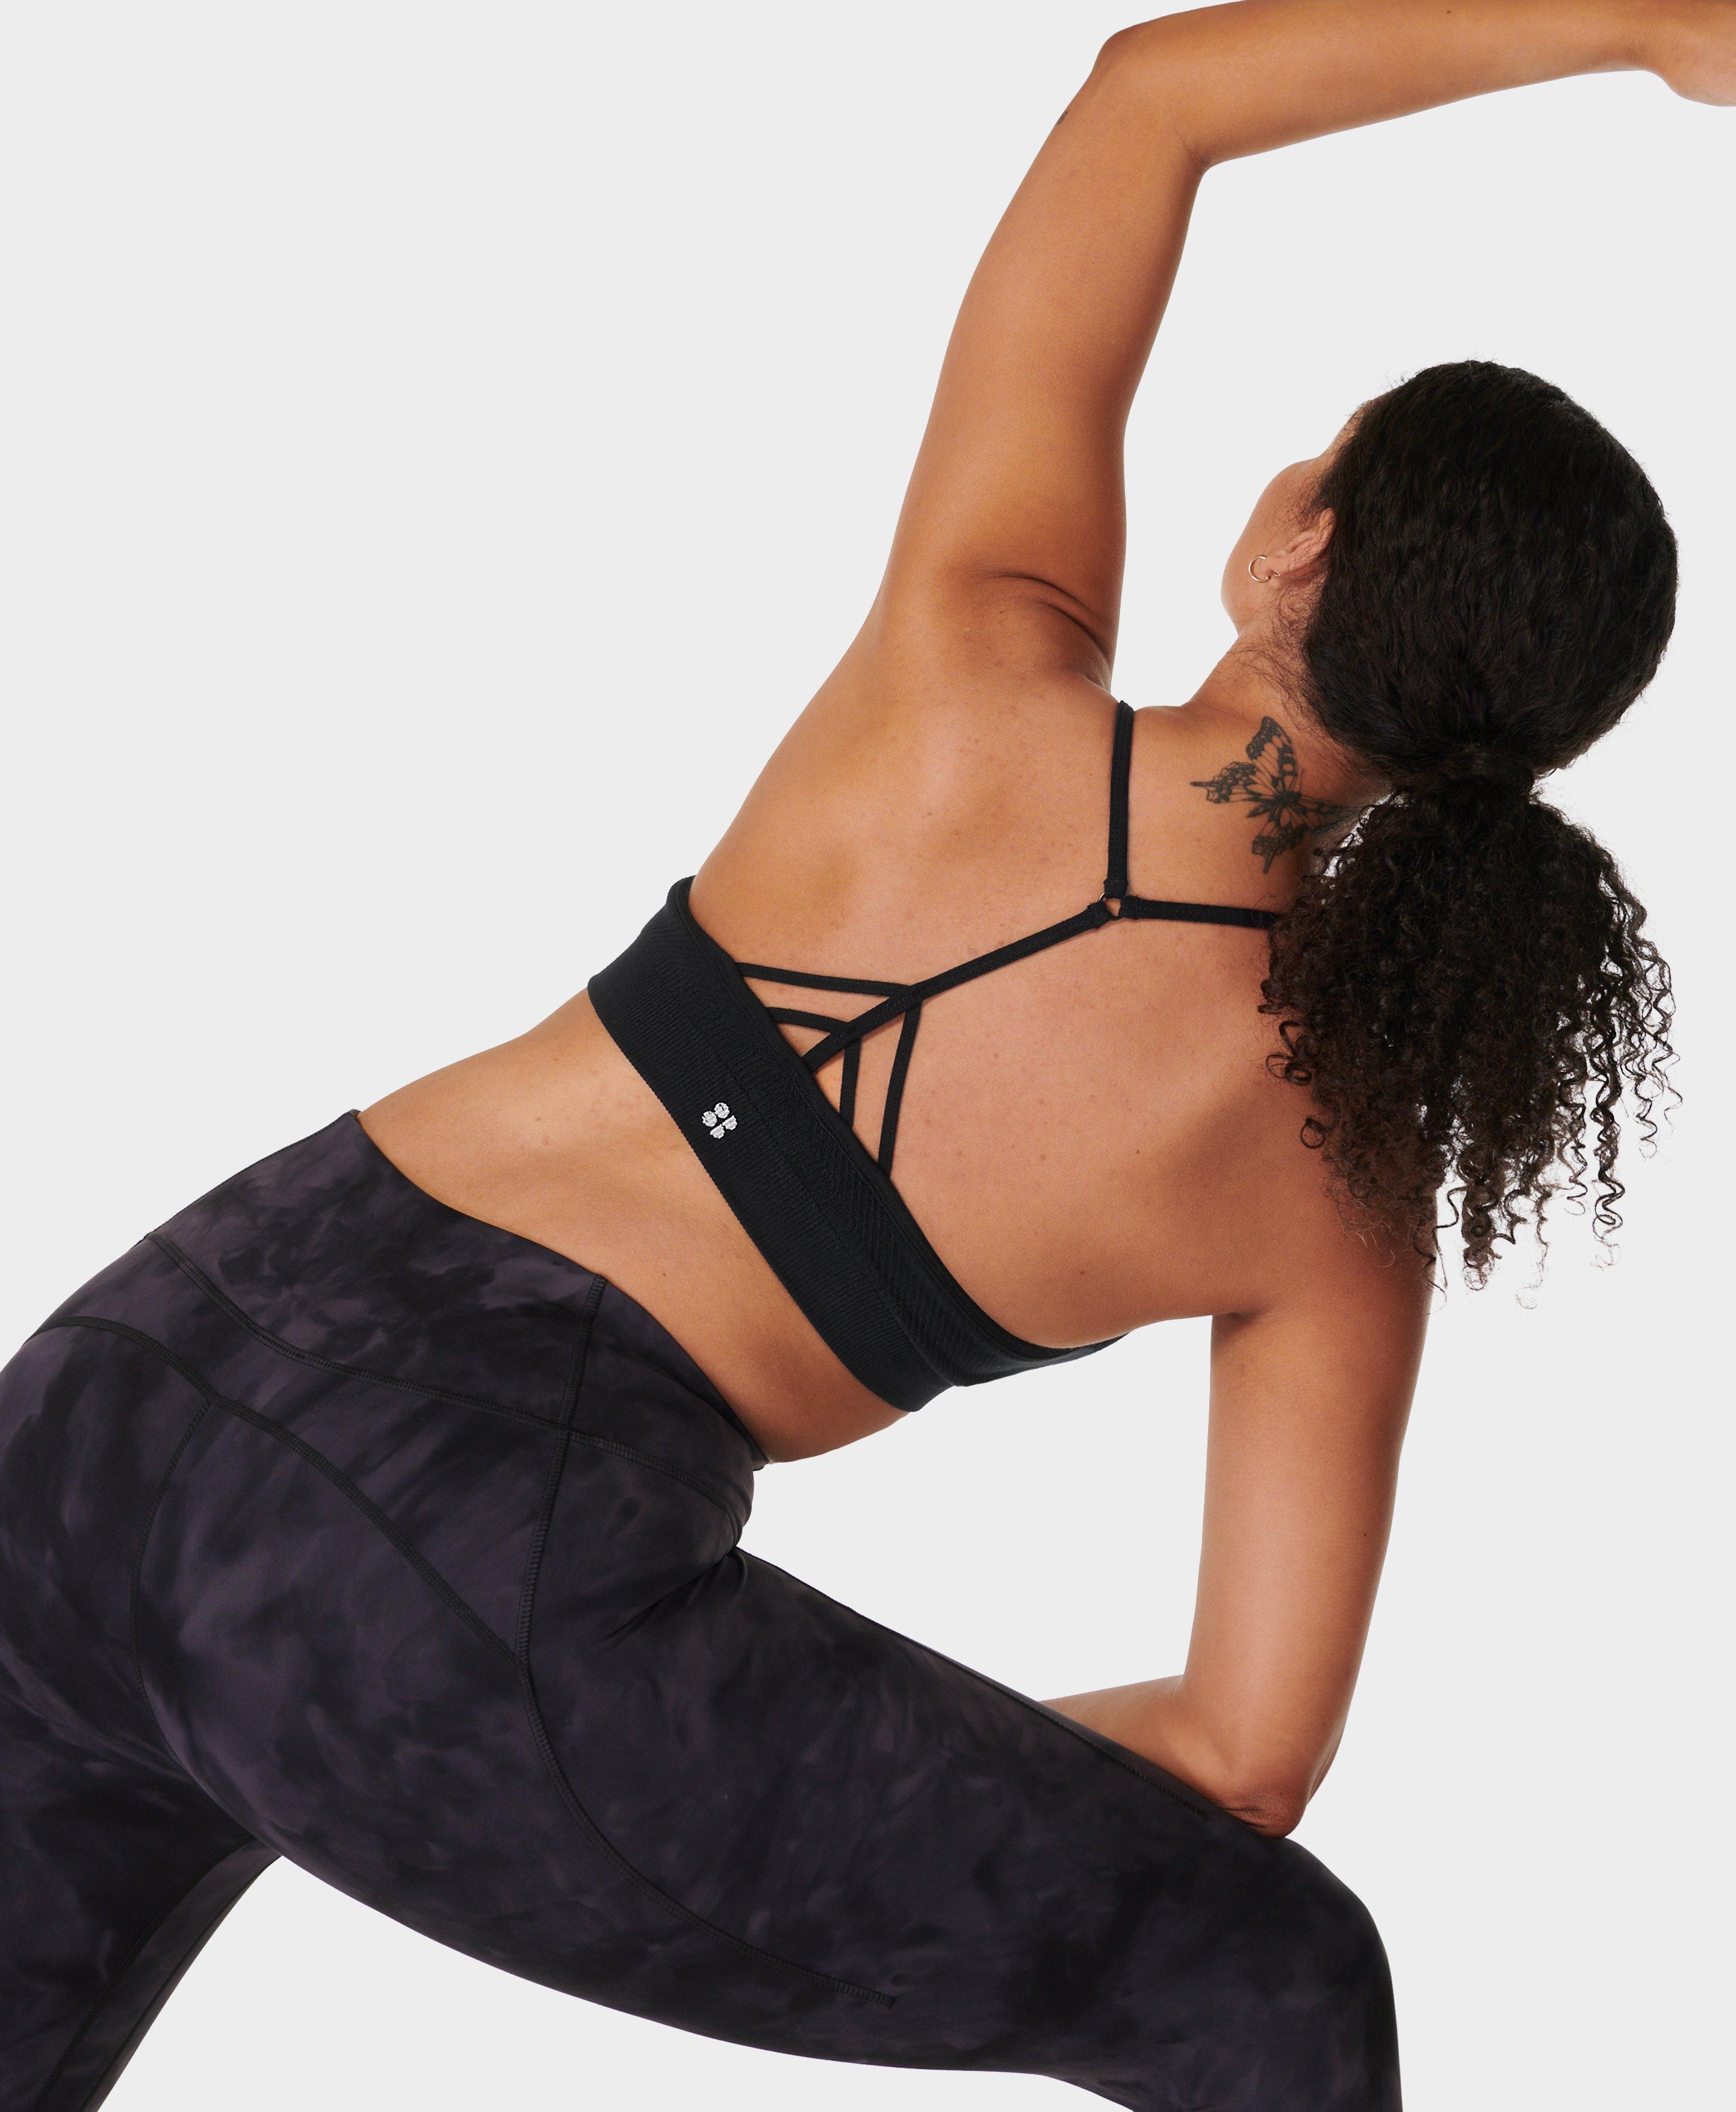 Mindful Seamless Yoga Bra - Black, Women's Sports Bras